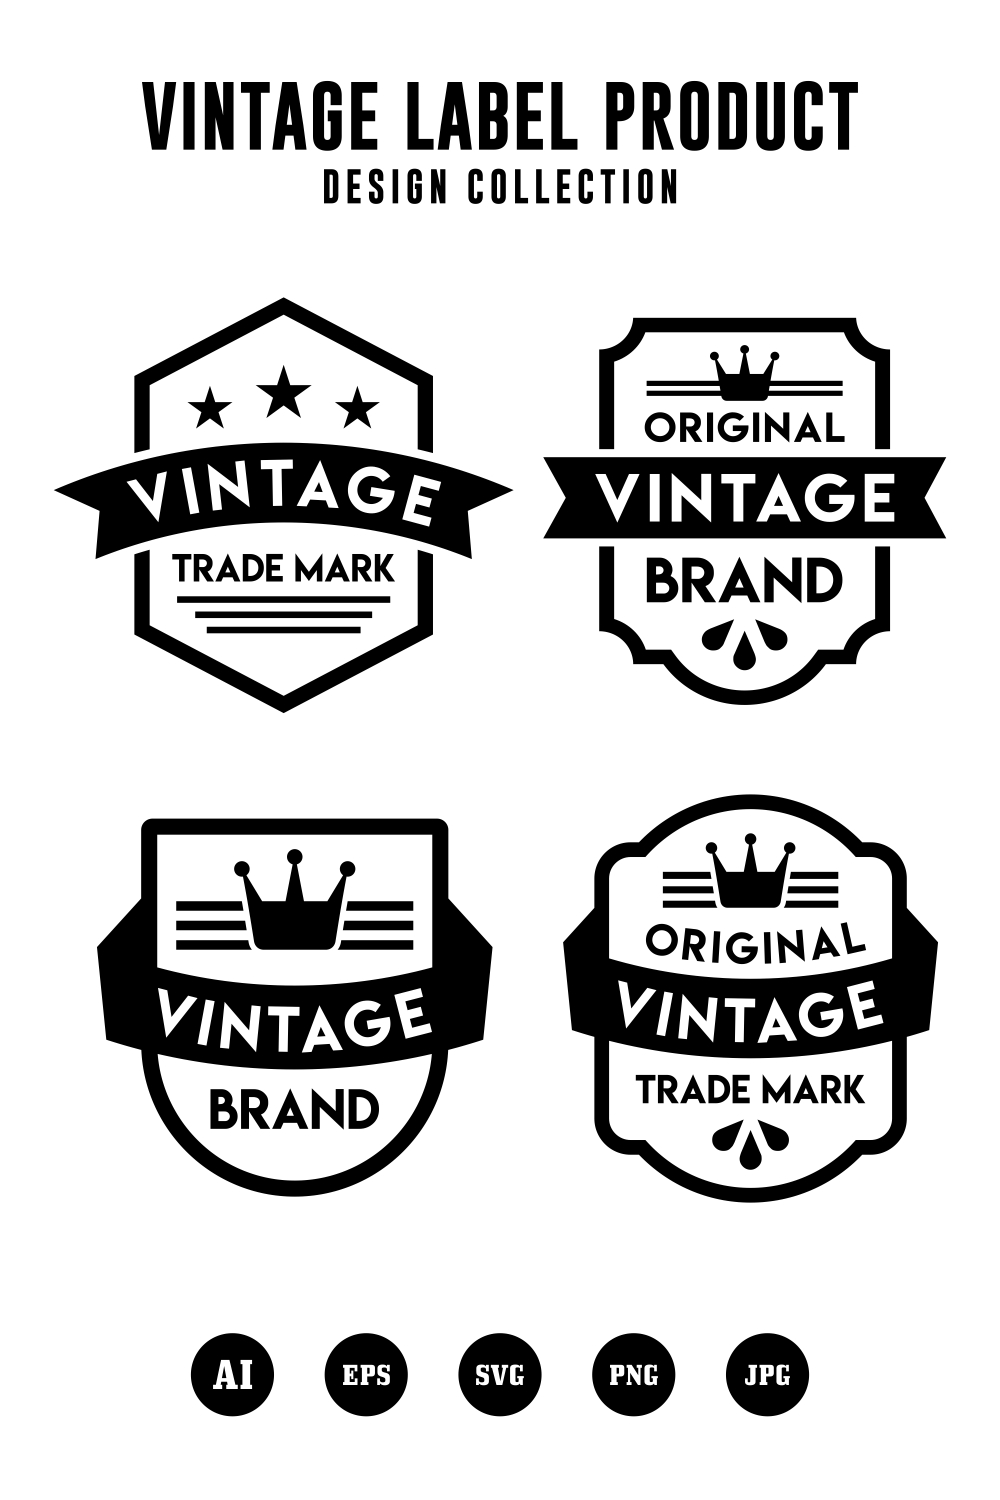 Label product vintage design collection - $5 pinterest preview image.